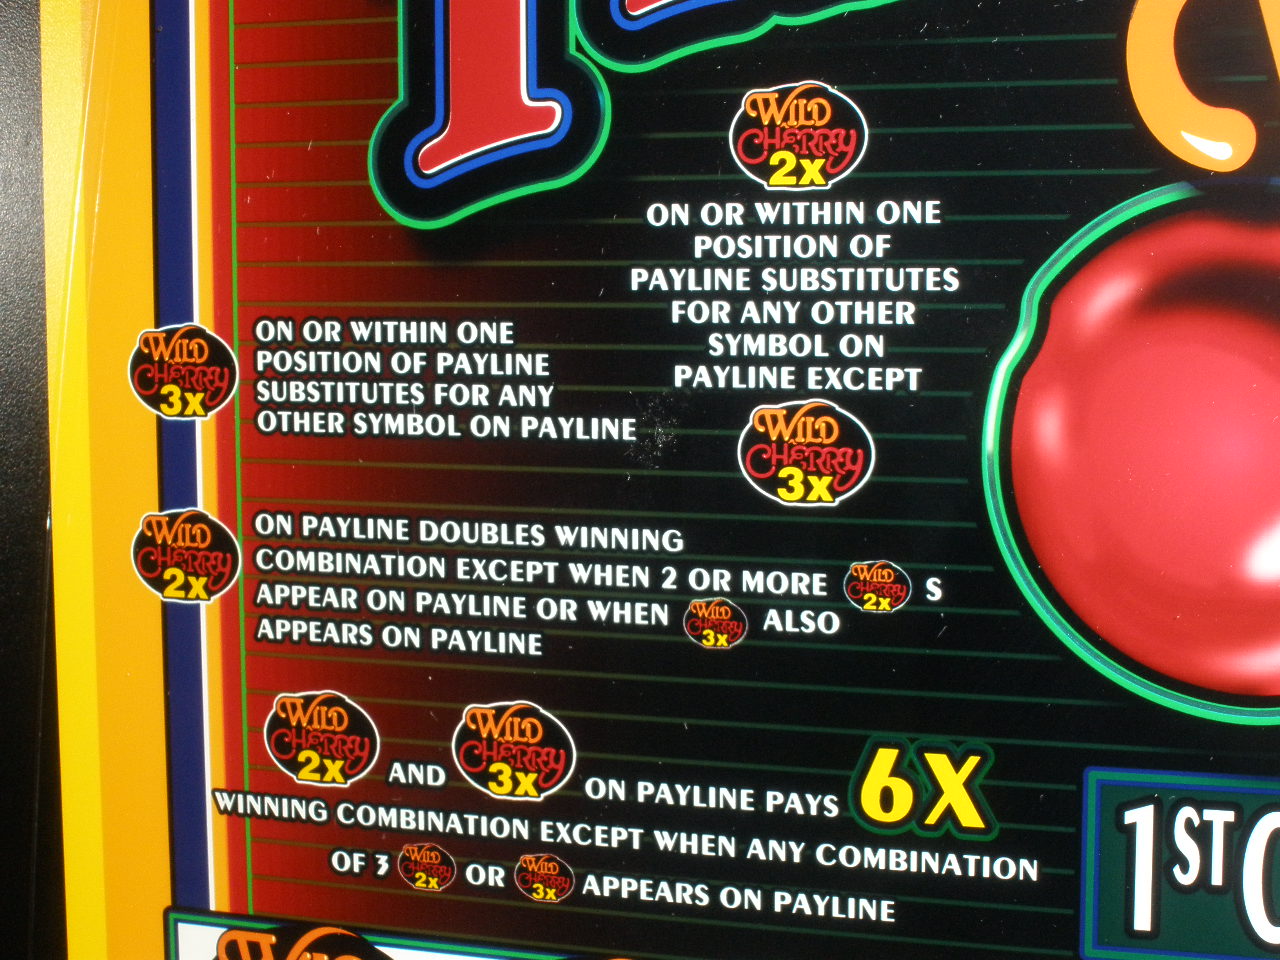 Double Wild Cherry Slot Machine